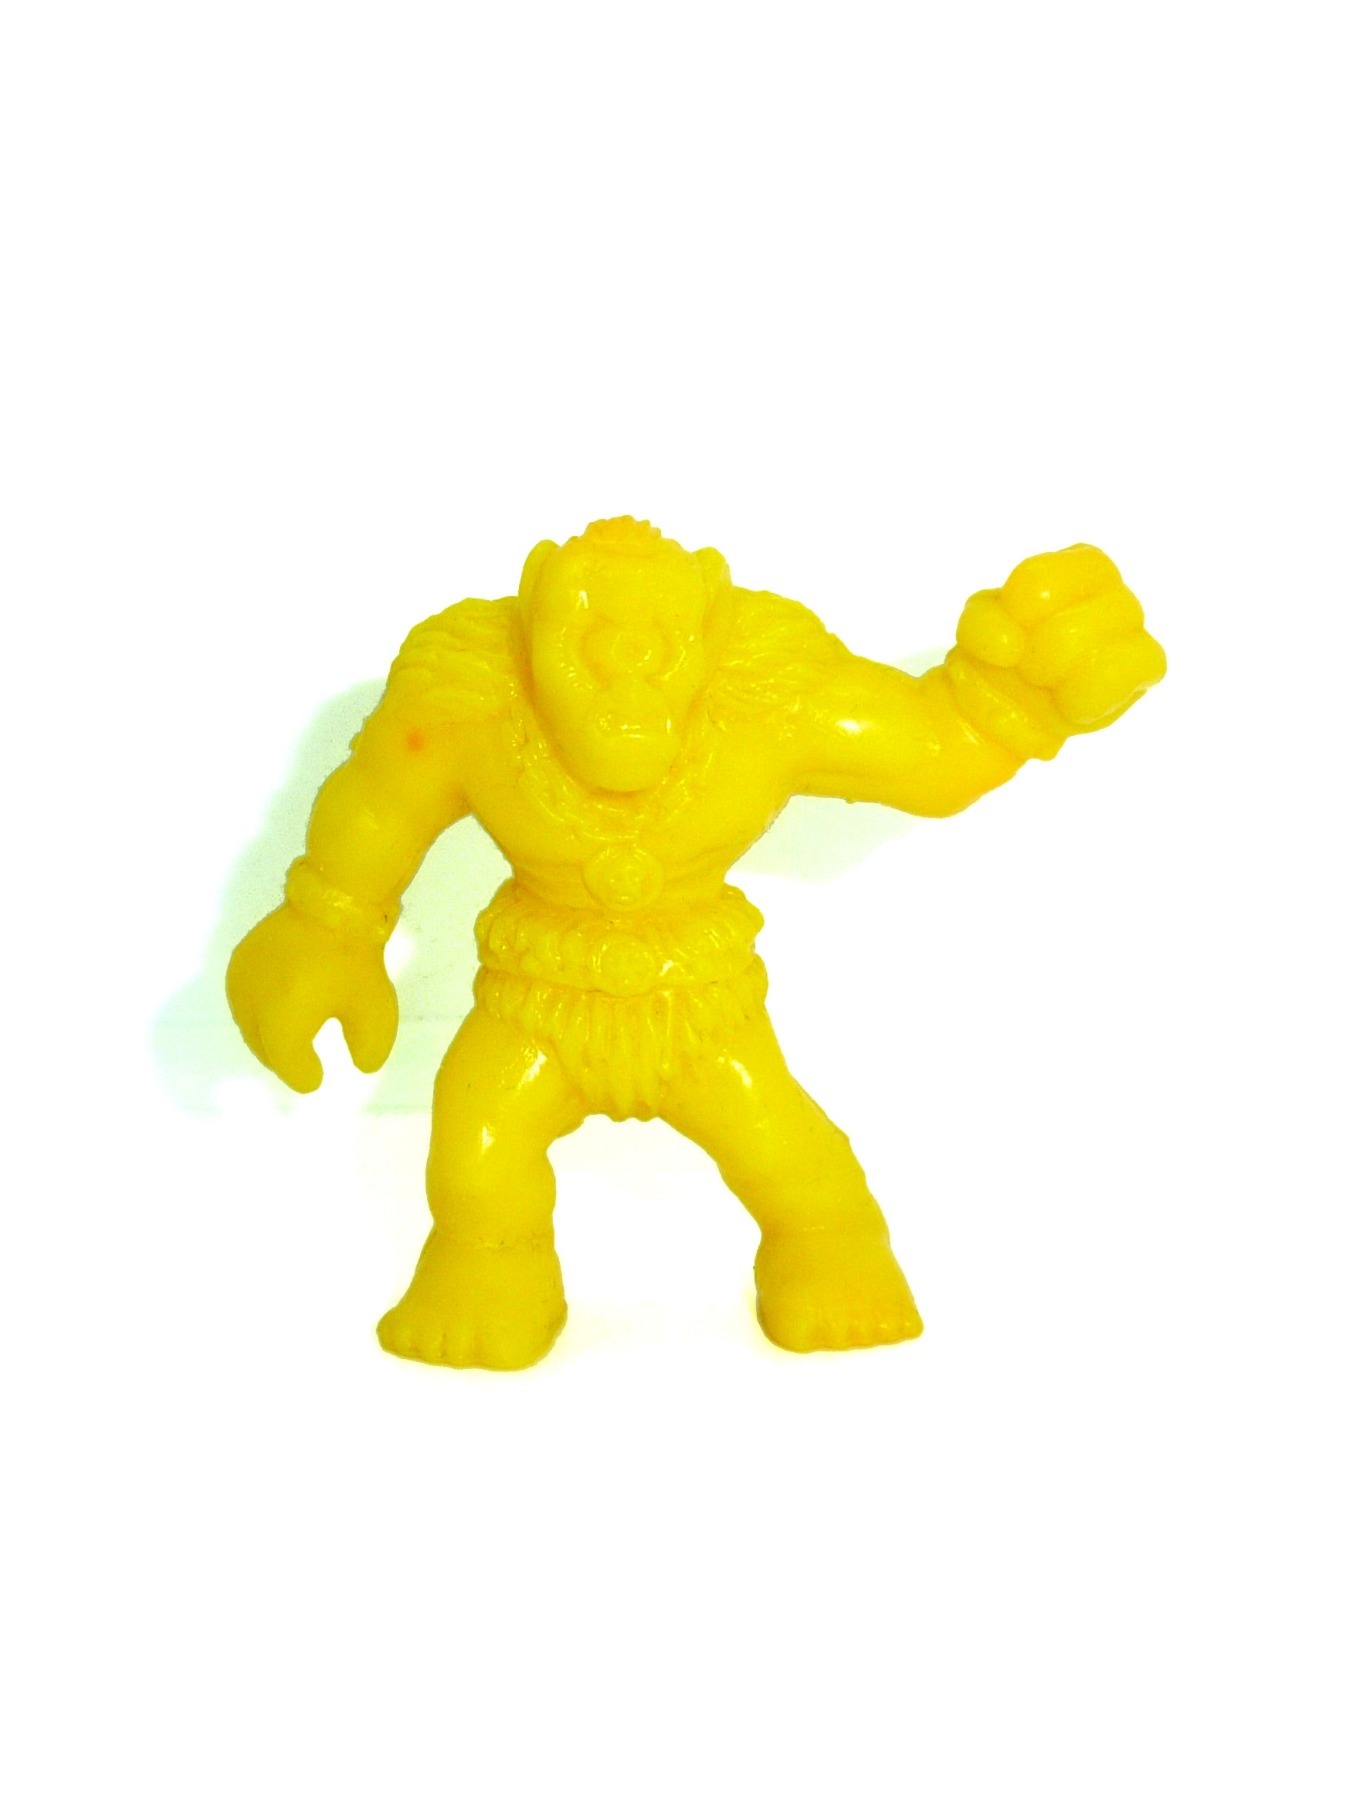 Cyclops gelb Nr 8